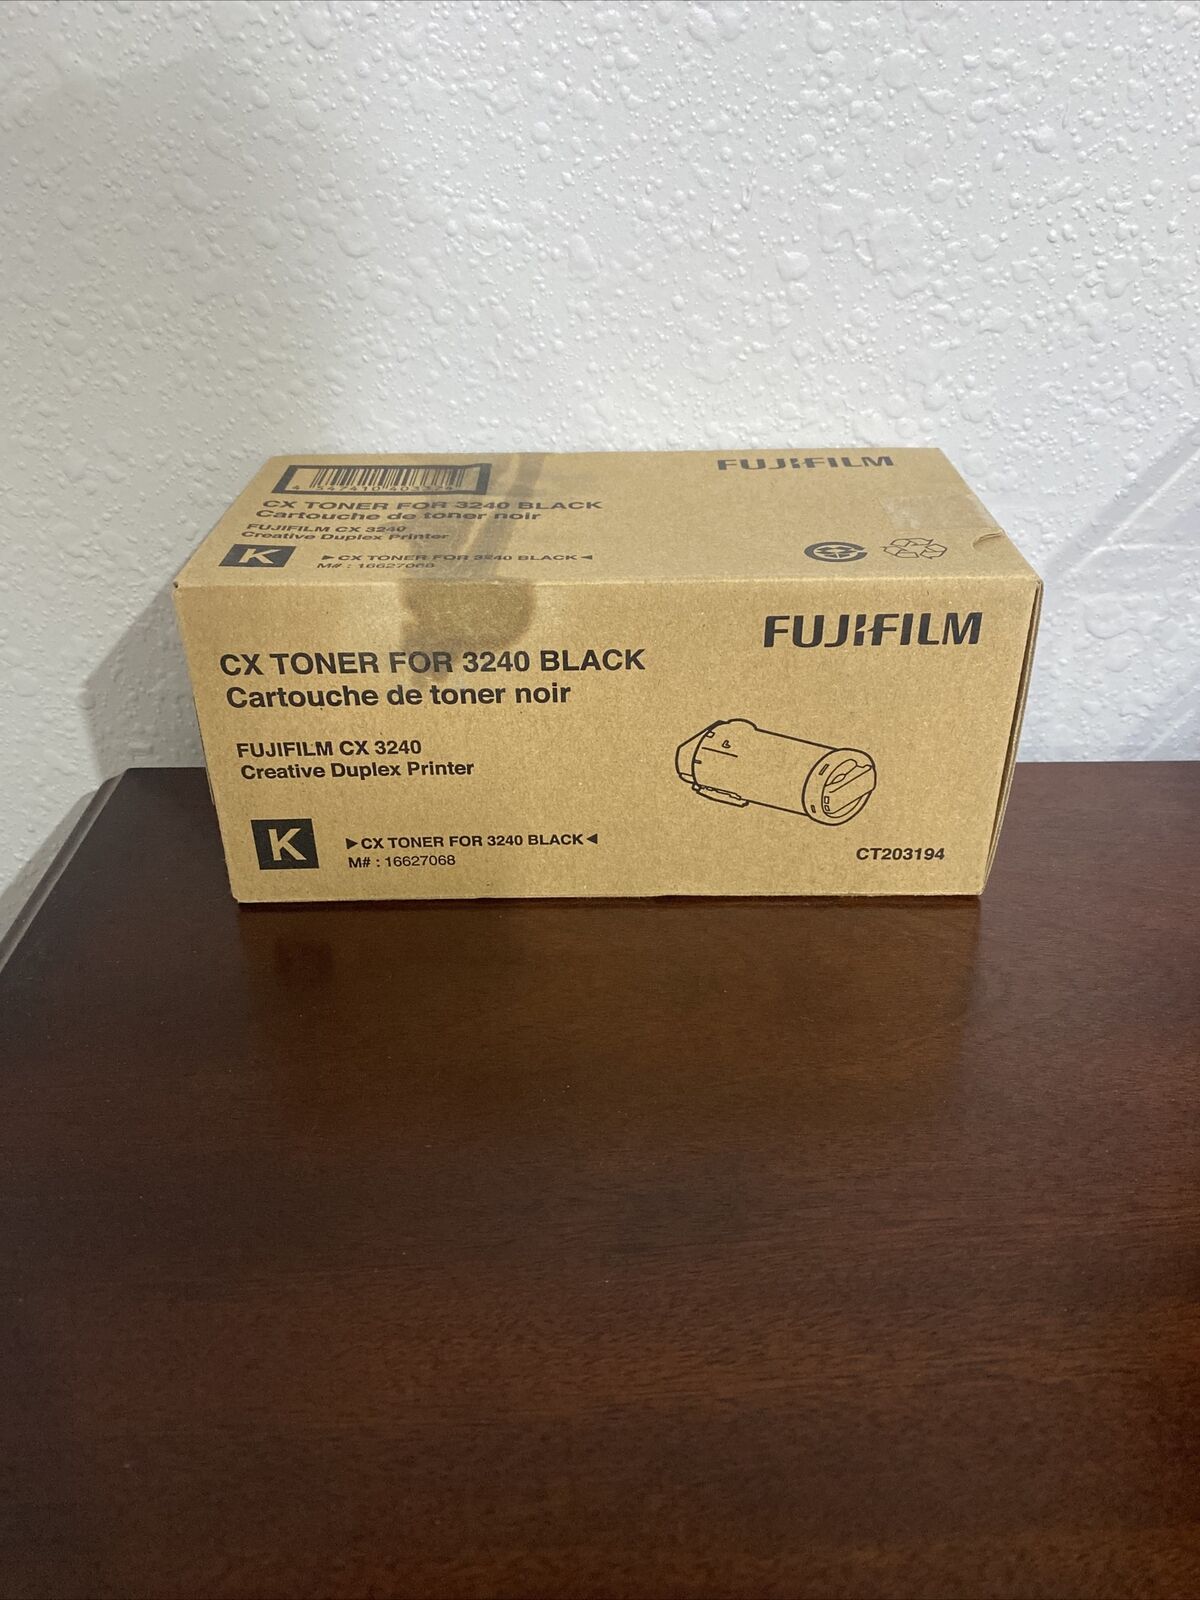 NEW Fujifilm CX Black Toner Cartridge for 3240 CT203194 16627068 Exp 06/2019+